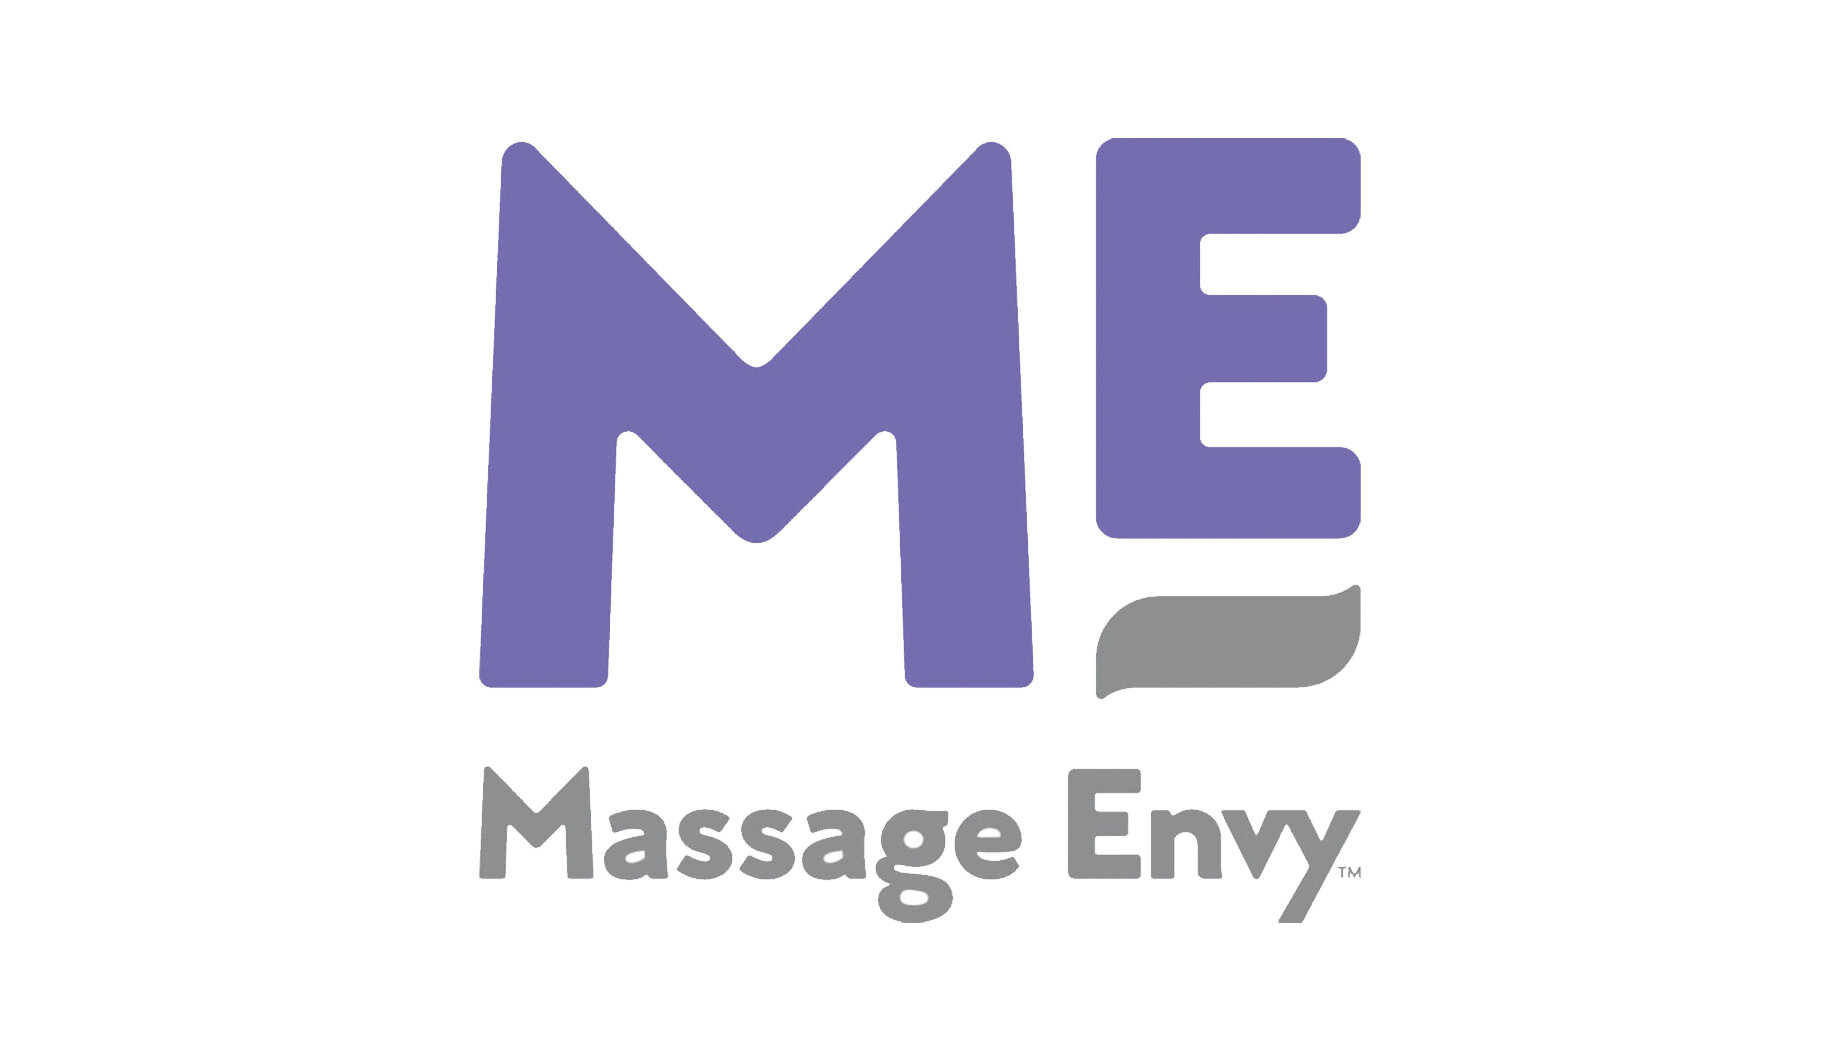 Massage_Envy_Logo.jpg